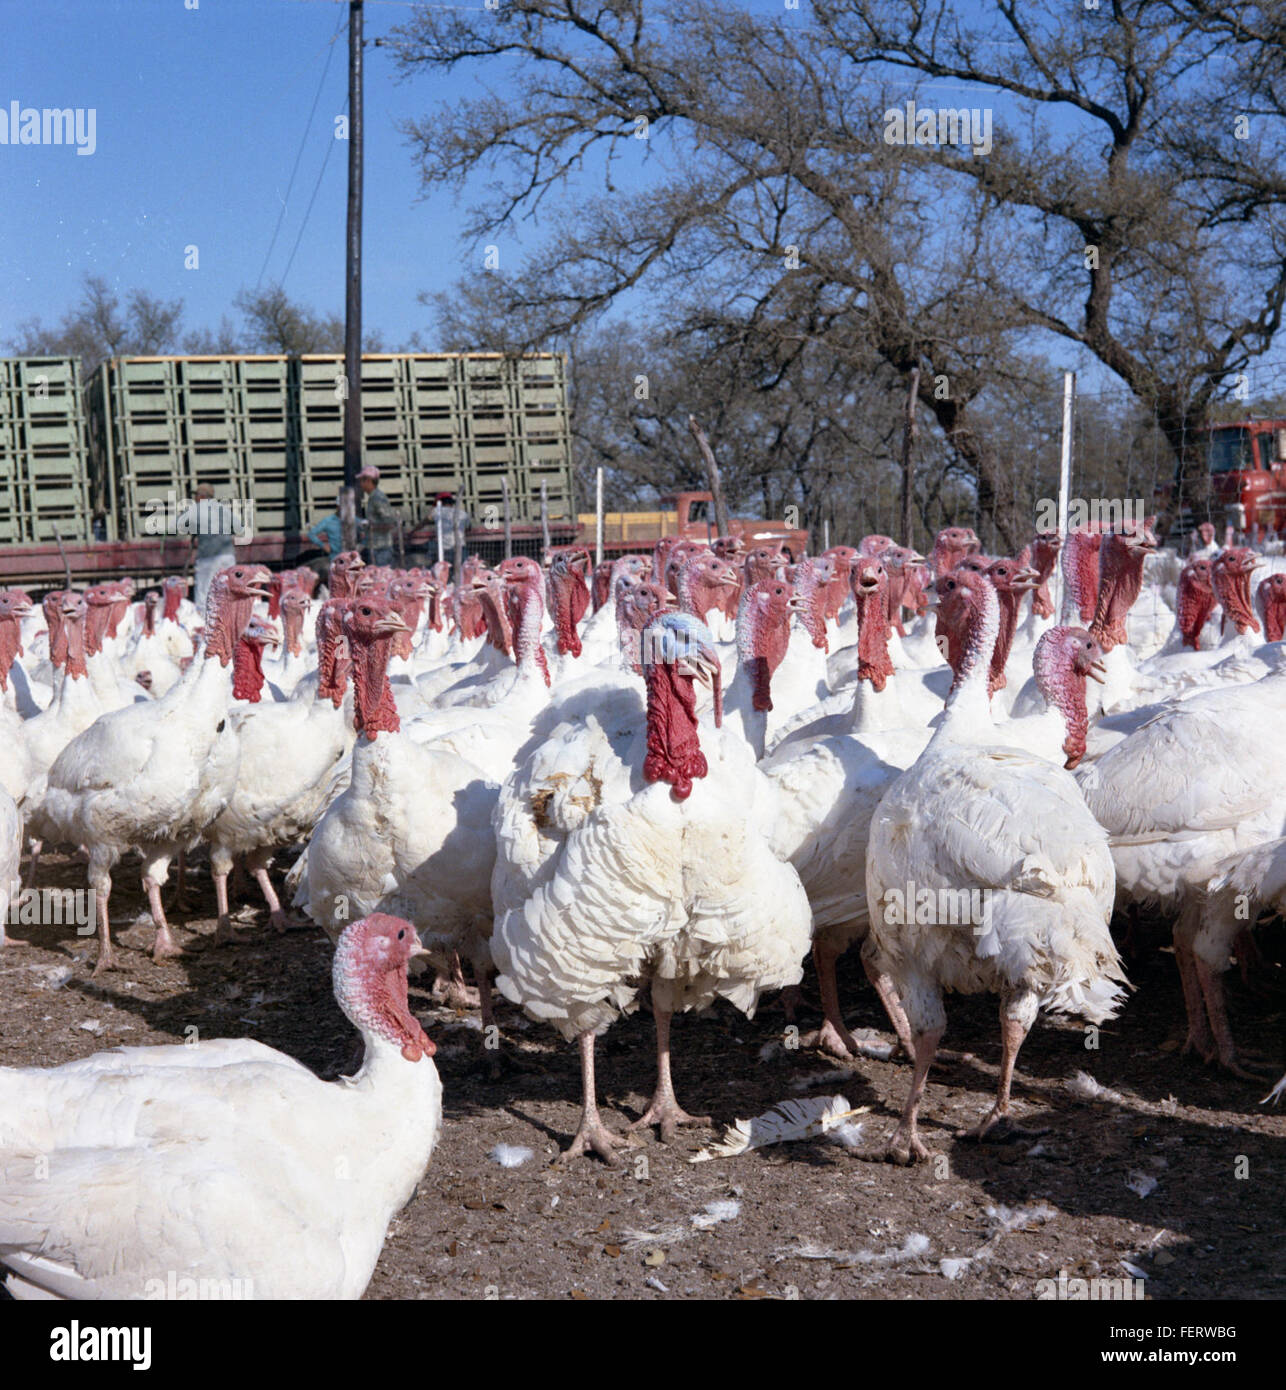 Turkeys in Pens Stock Photo